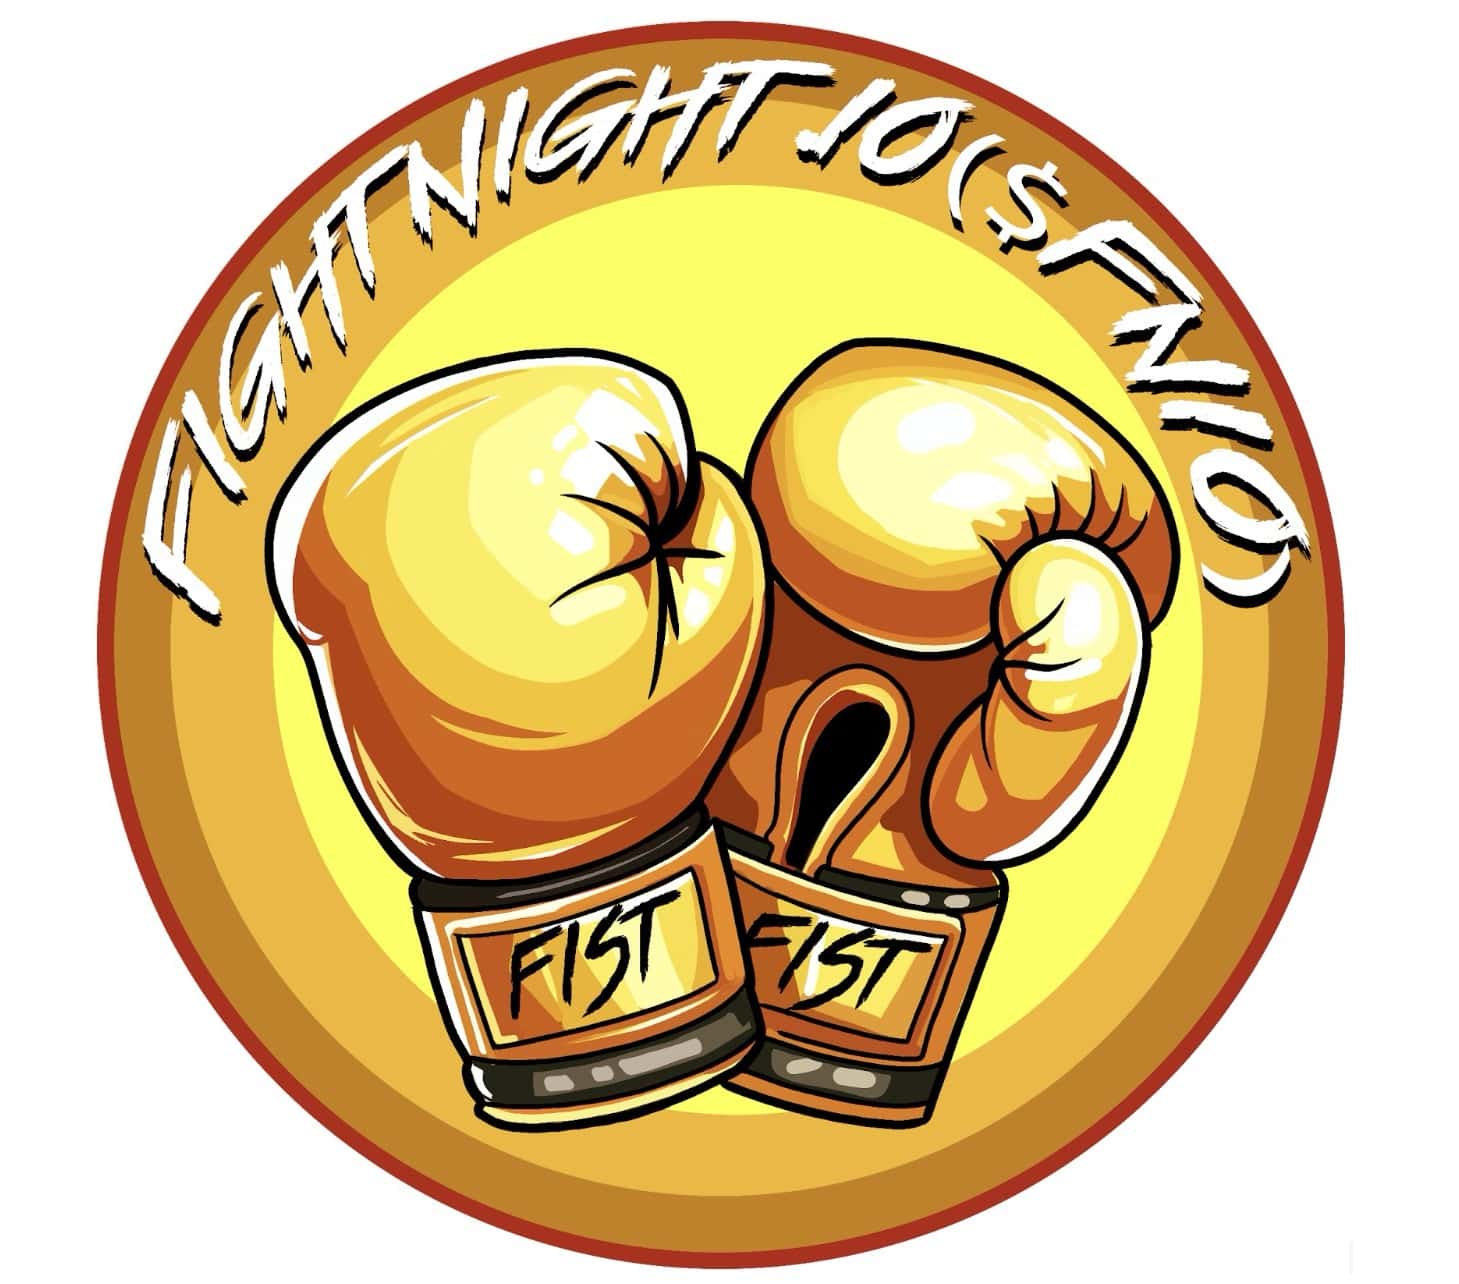 Fight Night meme coin mania